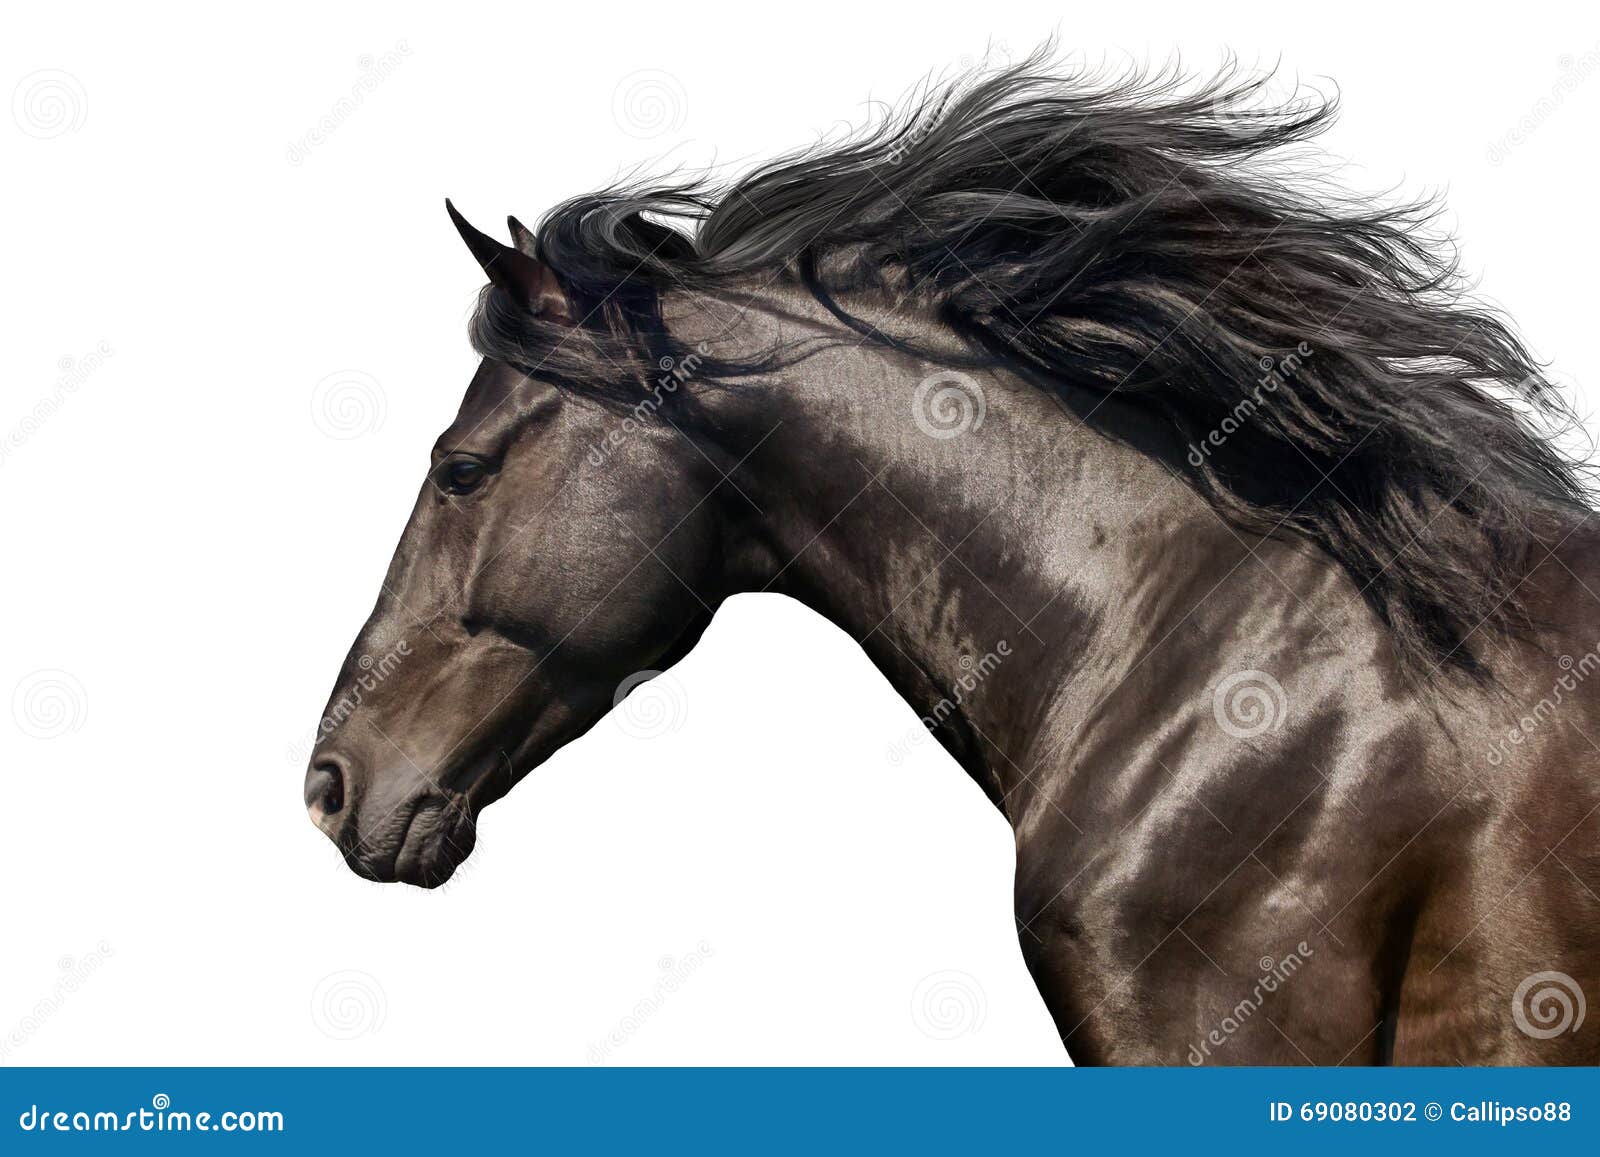 horse portrait in motion